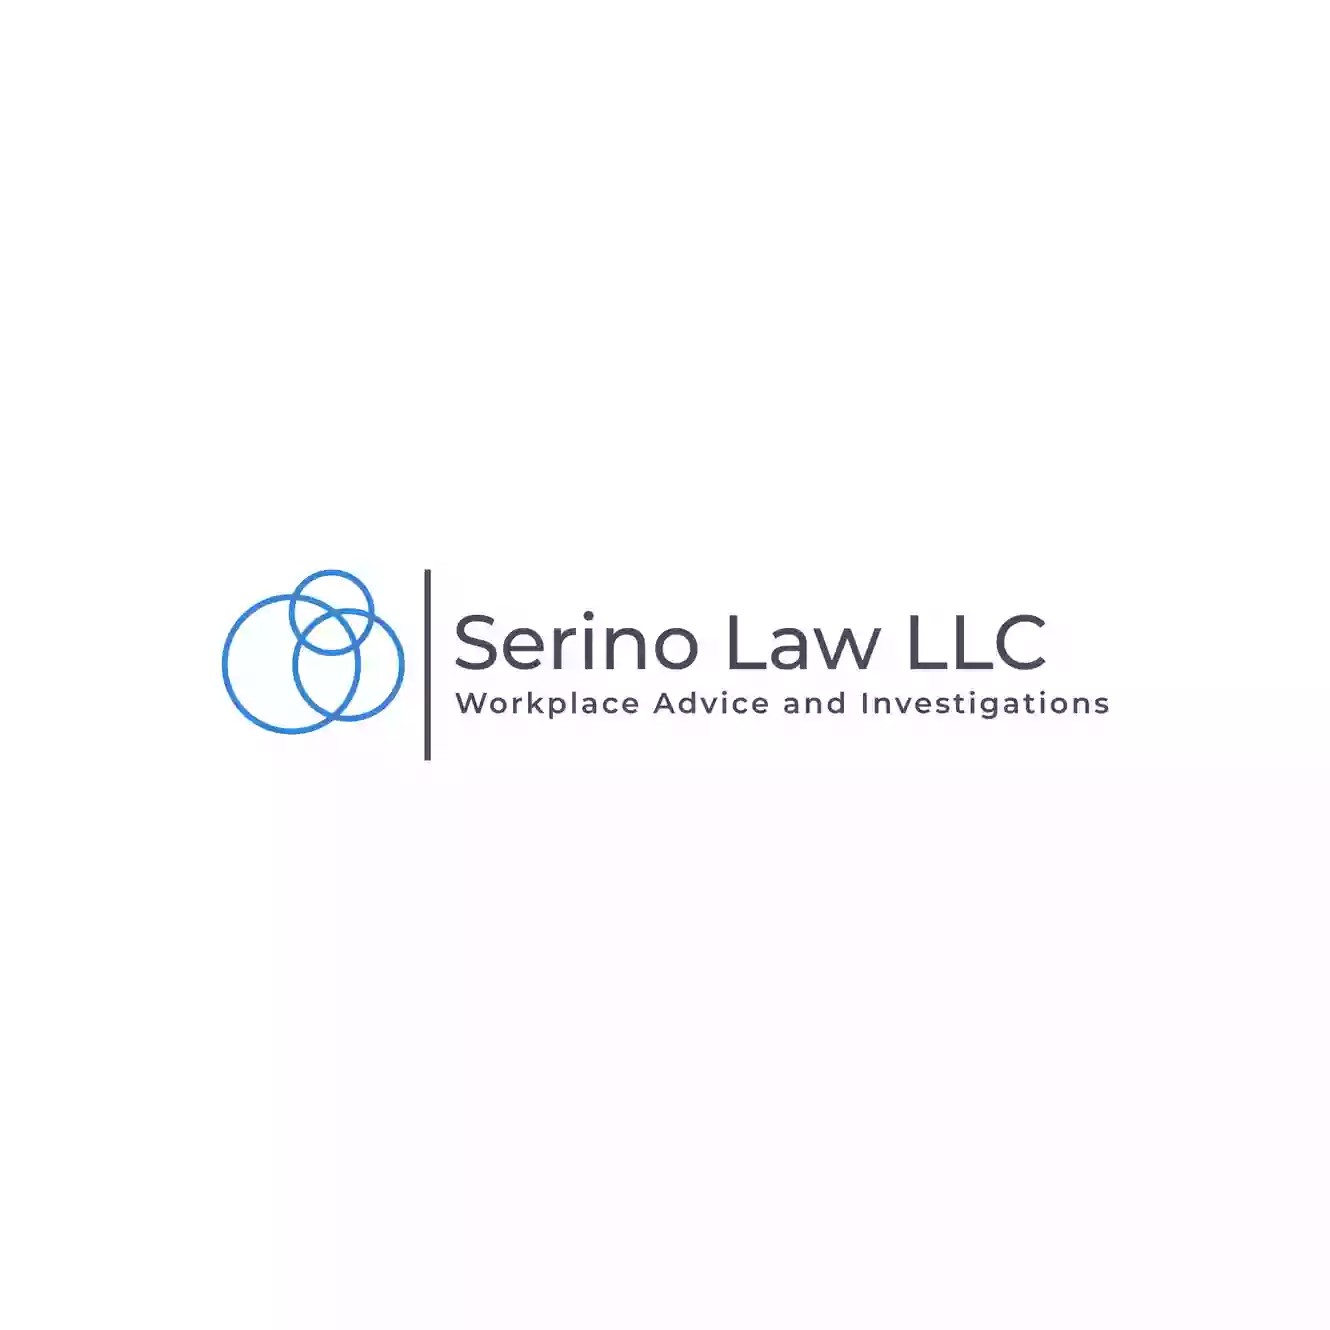 Serino Law LLC